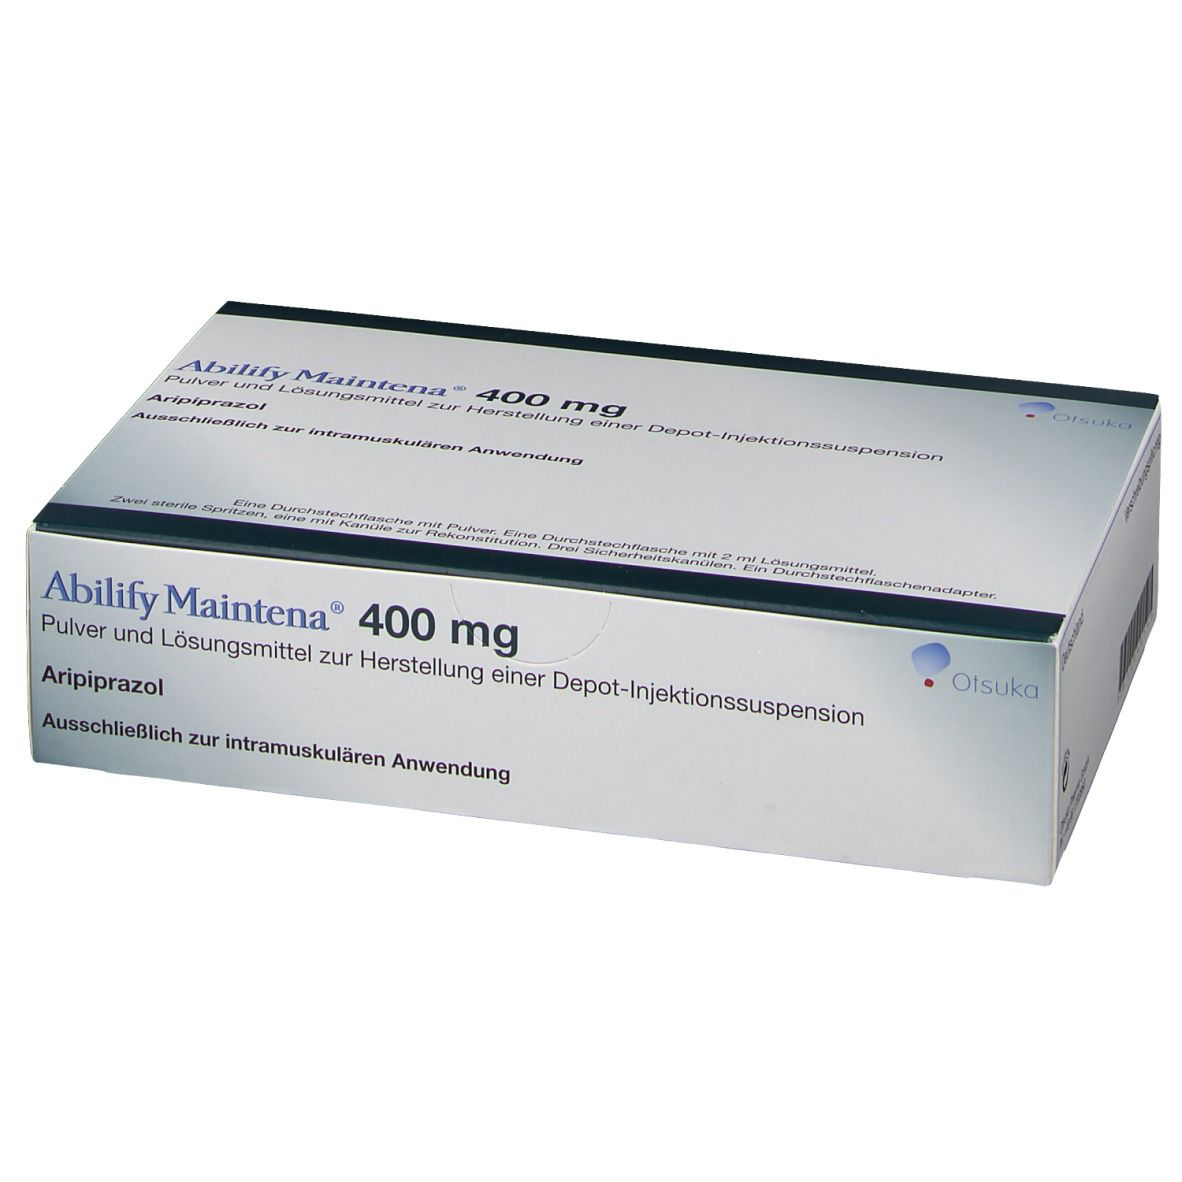 ABILIFY Maintena 400 mg P.+L.z.H.e.Depot-Inj-susp.